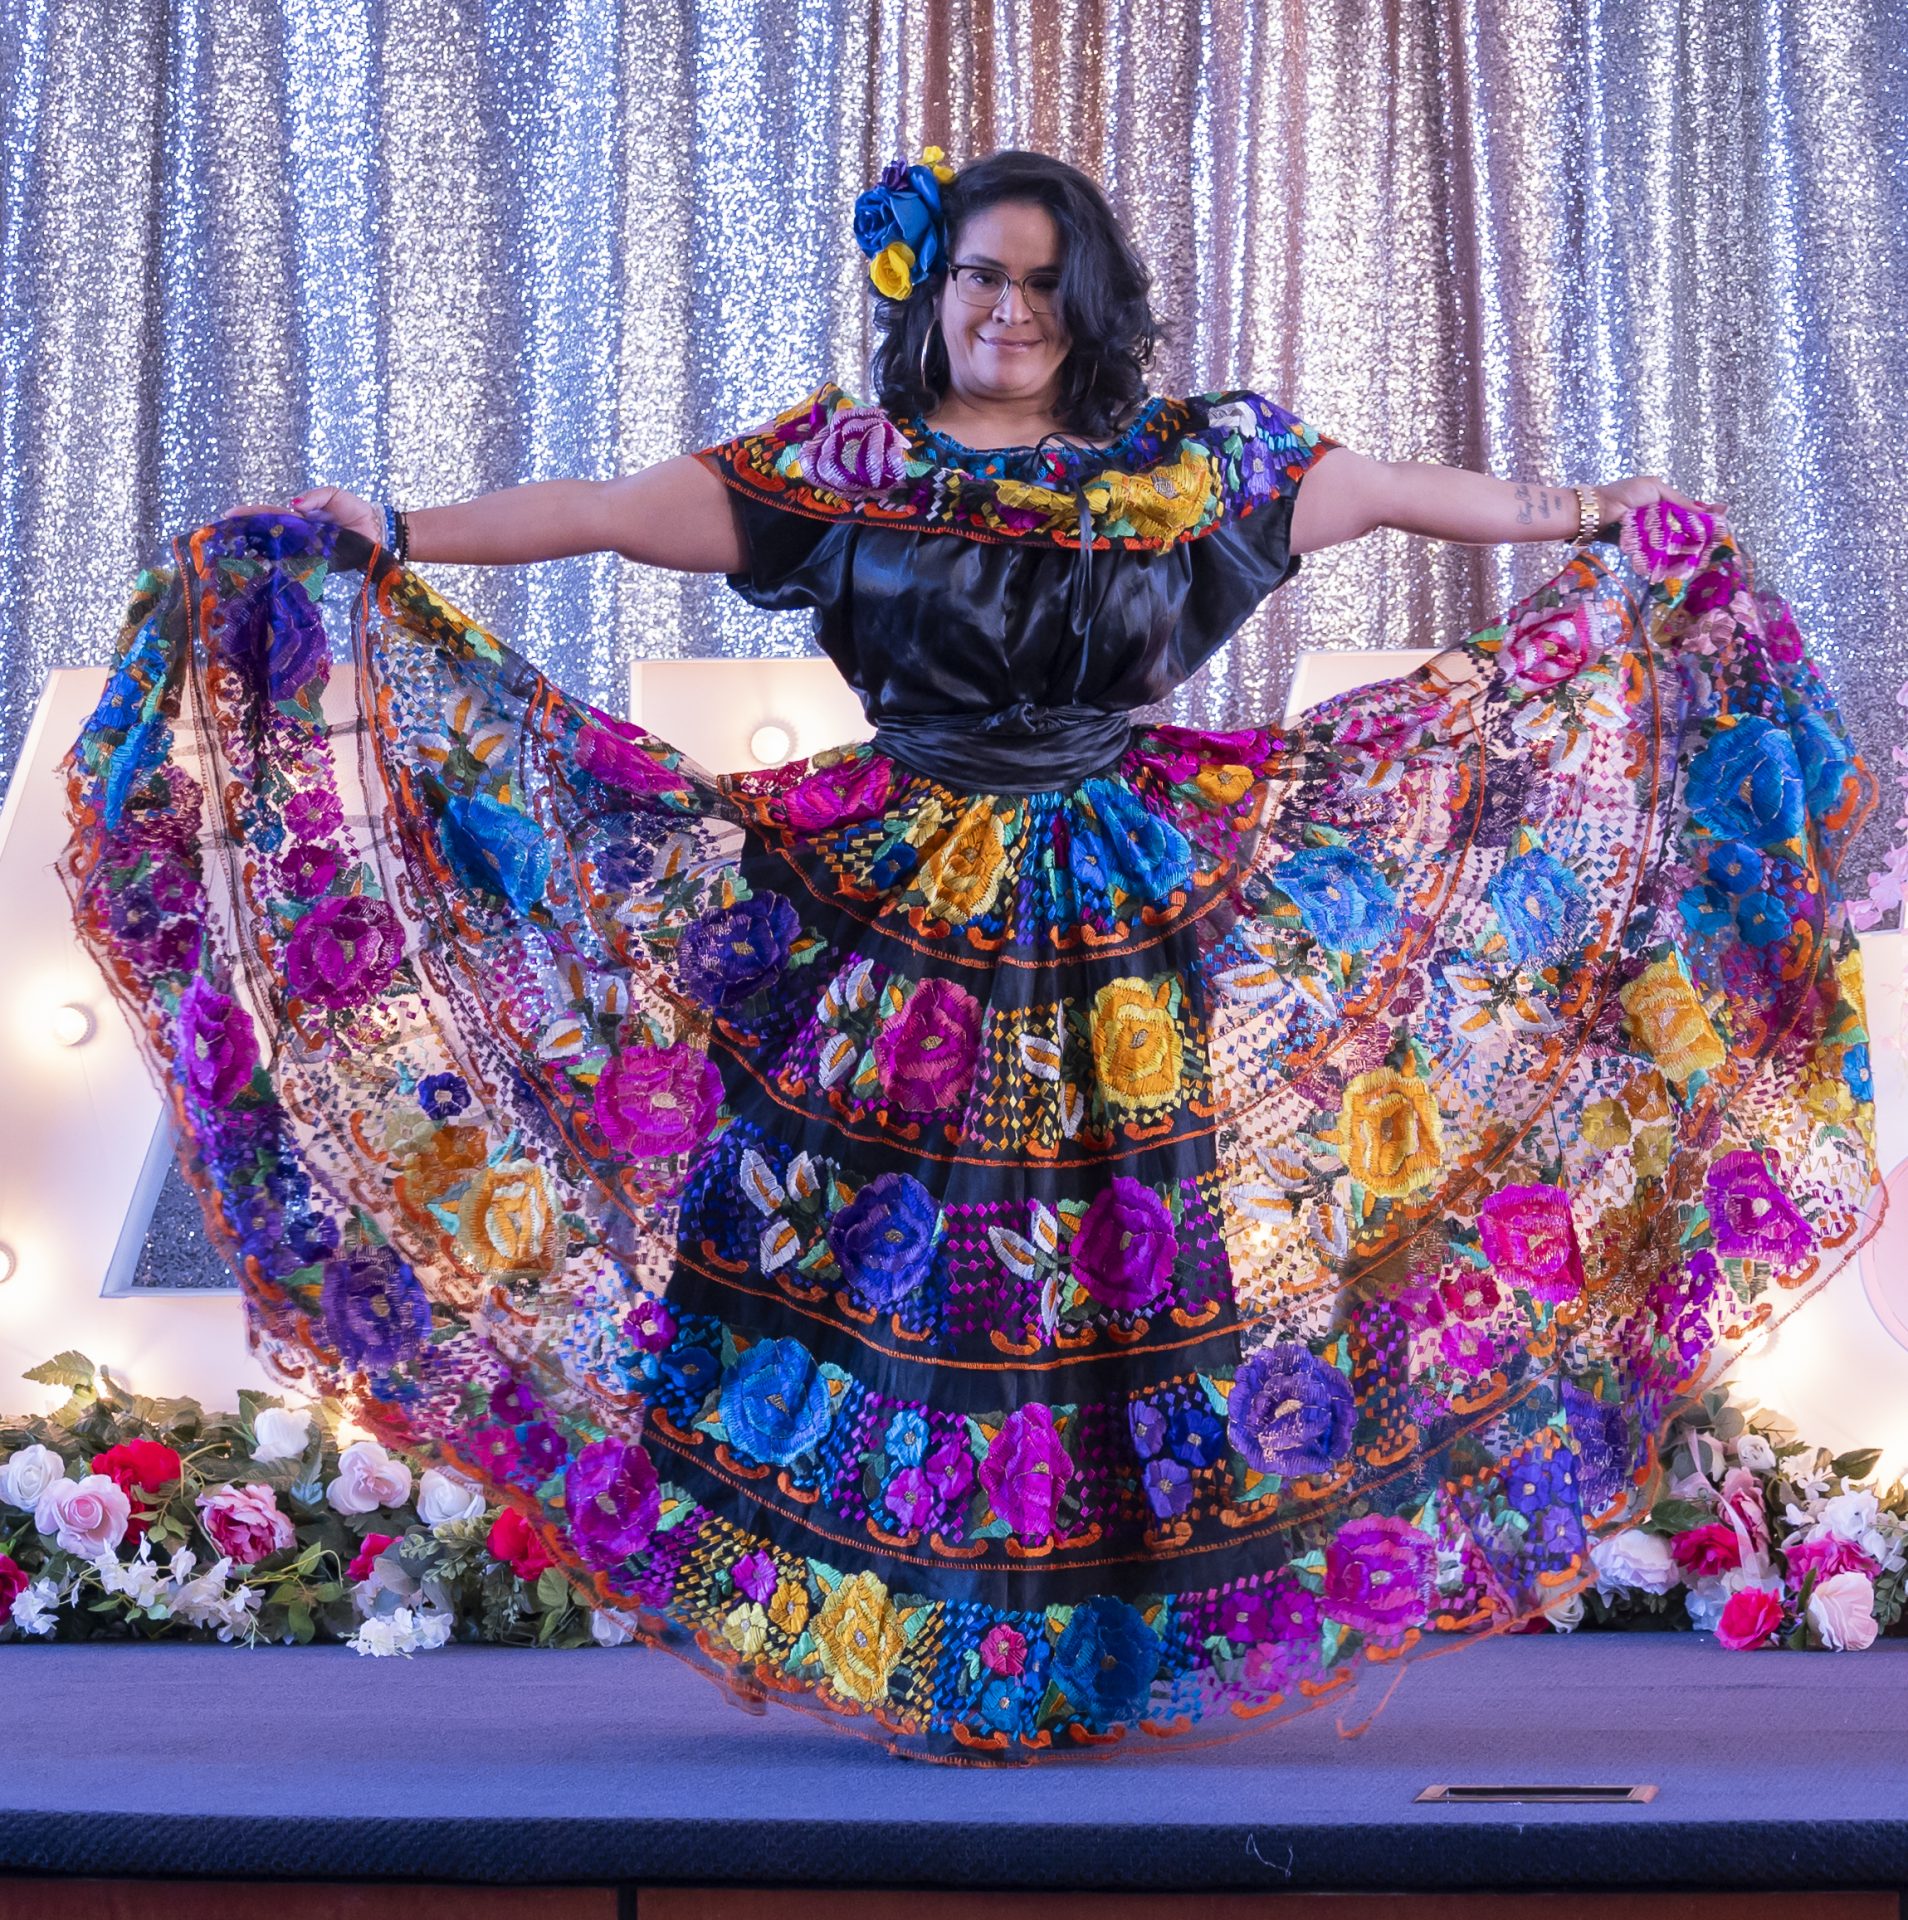 PHOTO GALLERY: Hispanic Heritage Cultural Fashion Show